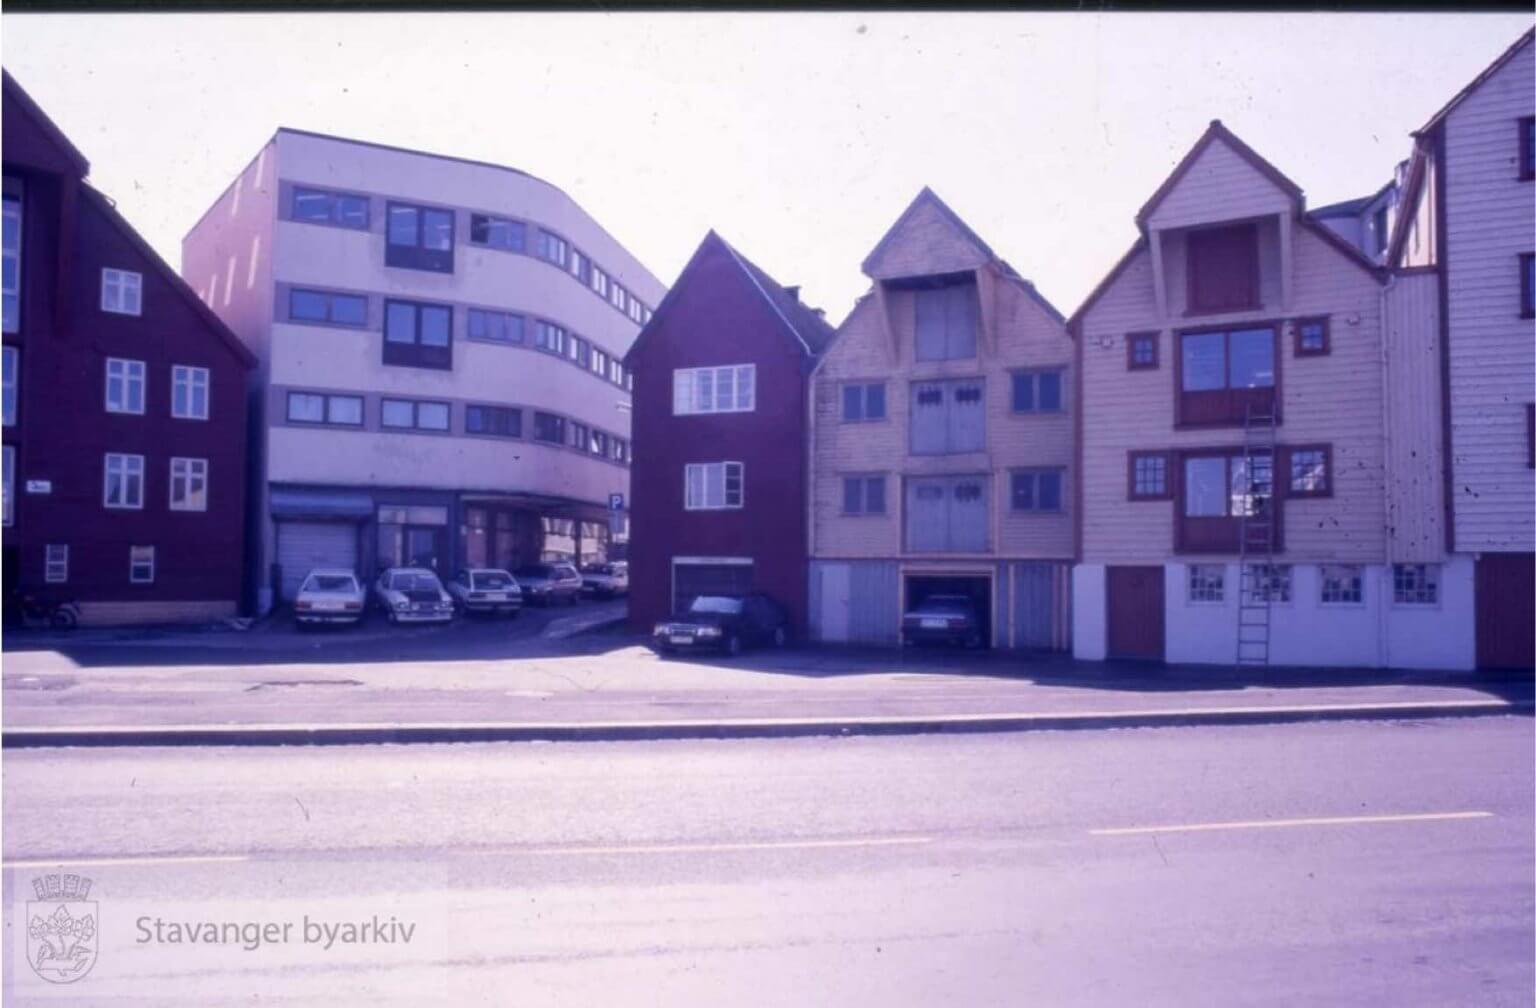 Nordbøgata-8-1980-1990-Stavanger-Byarkiv-1536x1008